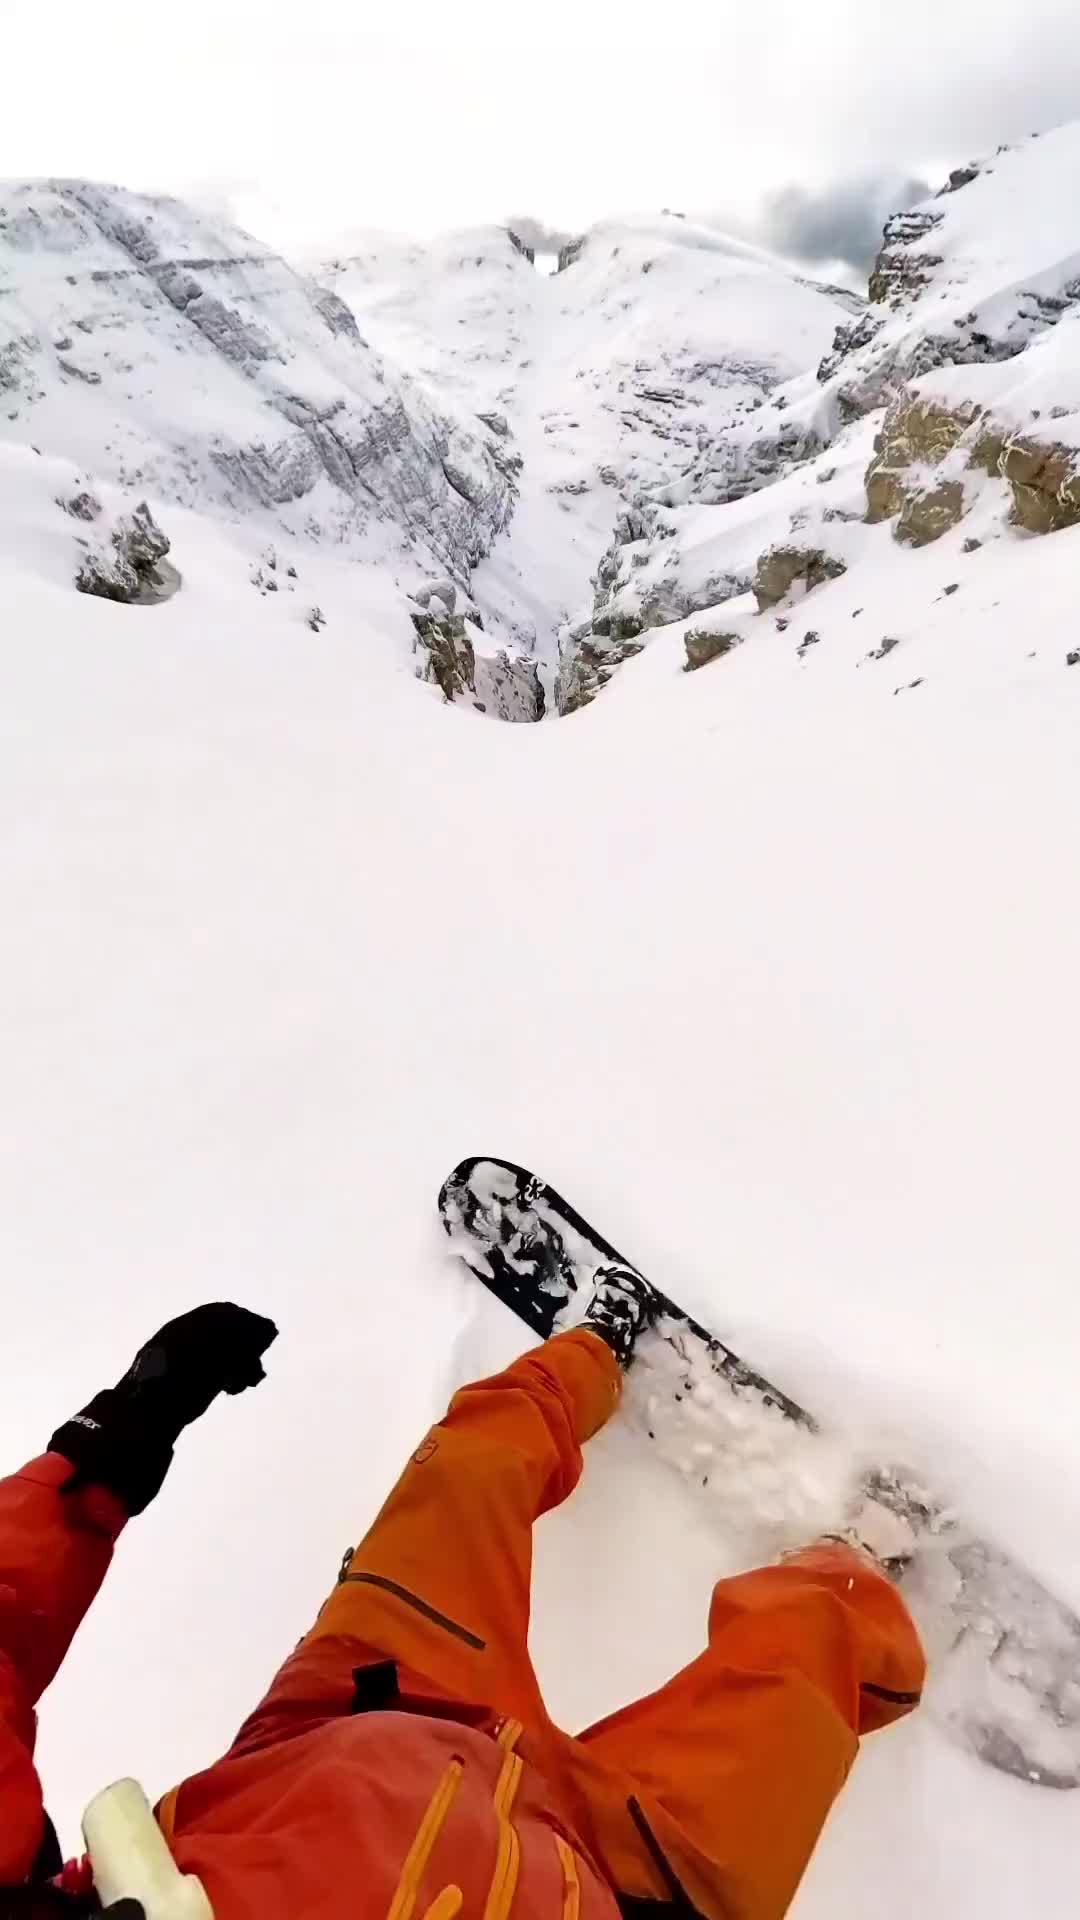 Incredible Powder Snowboarding in Dolomites Yesterday!